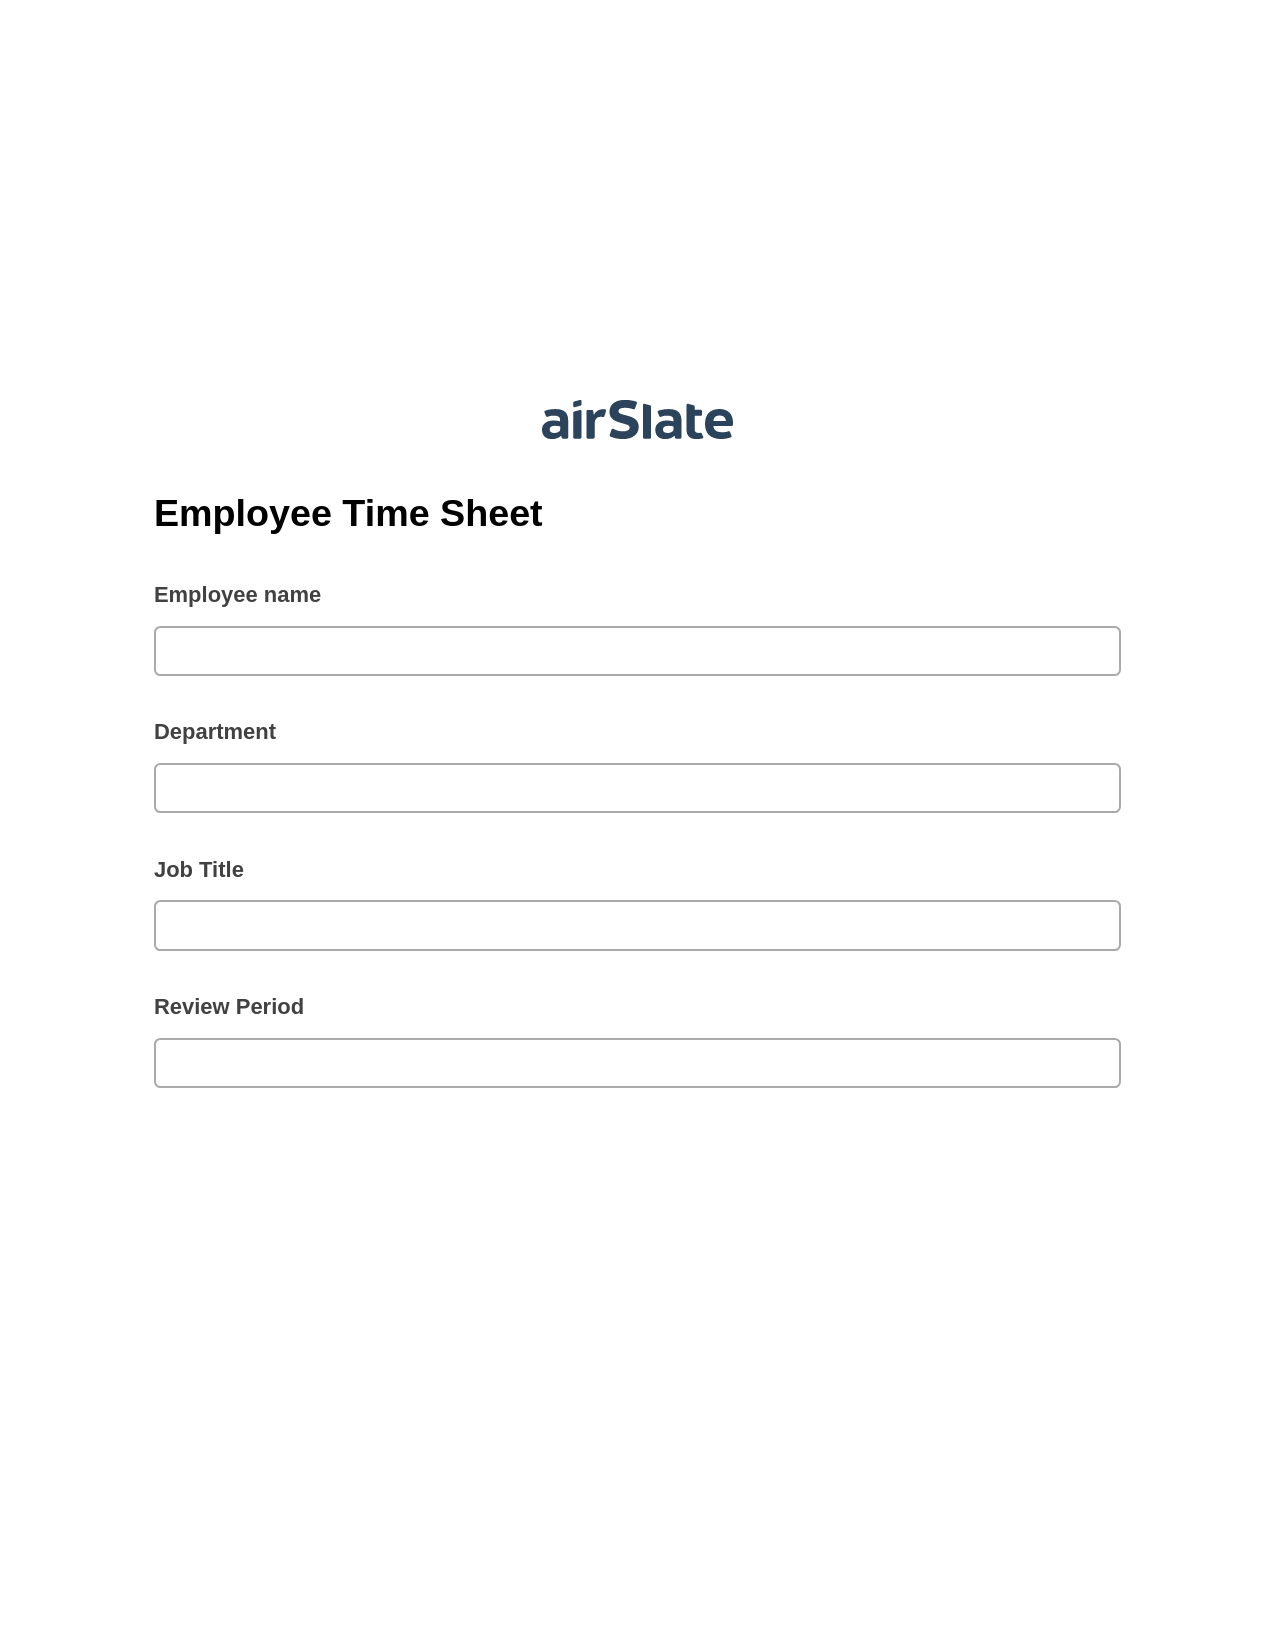 Employee Time Sheet Pre-fill from MySQL Bot, Create slate addon, Archive to Google Drive Bot